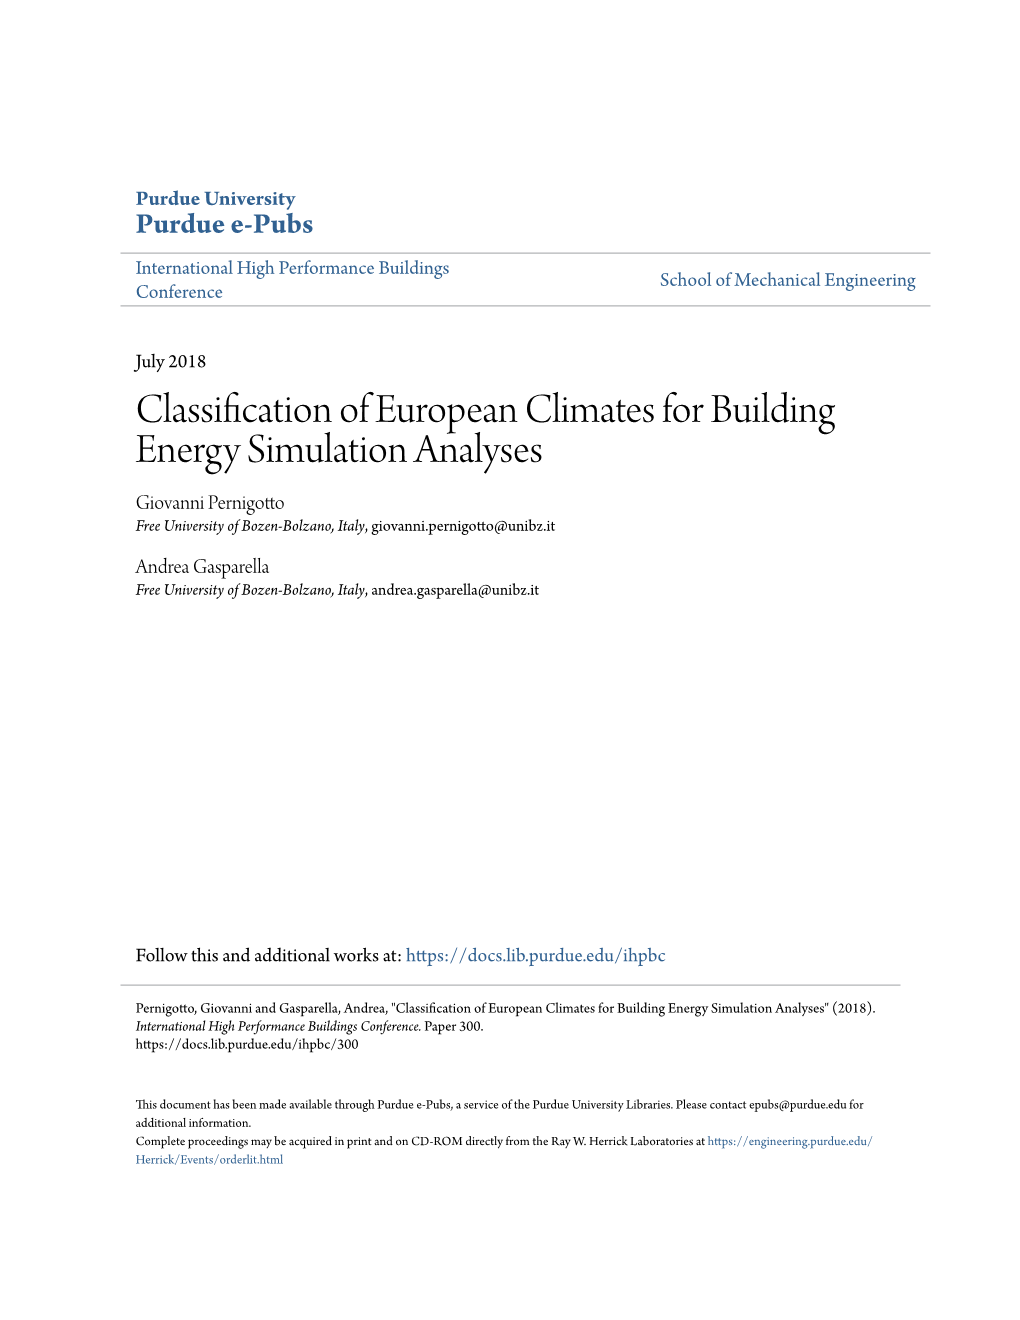 Classification of European Climates for Building Energy Simulation Analyses Giovanni Pernigotto Free University of Bozen-Bolzano, Italy, Giovanni.Pernigotto@Unibz.It